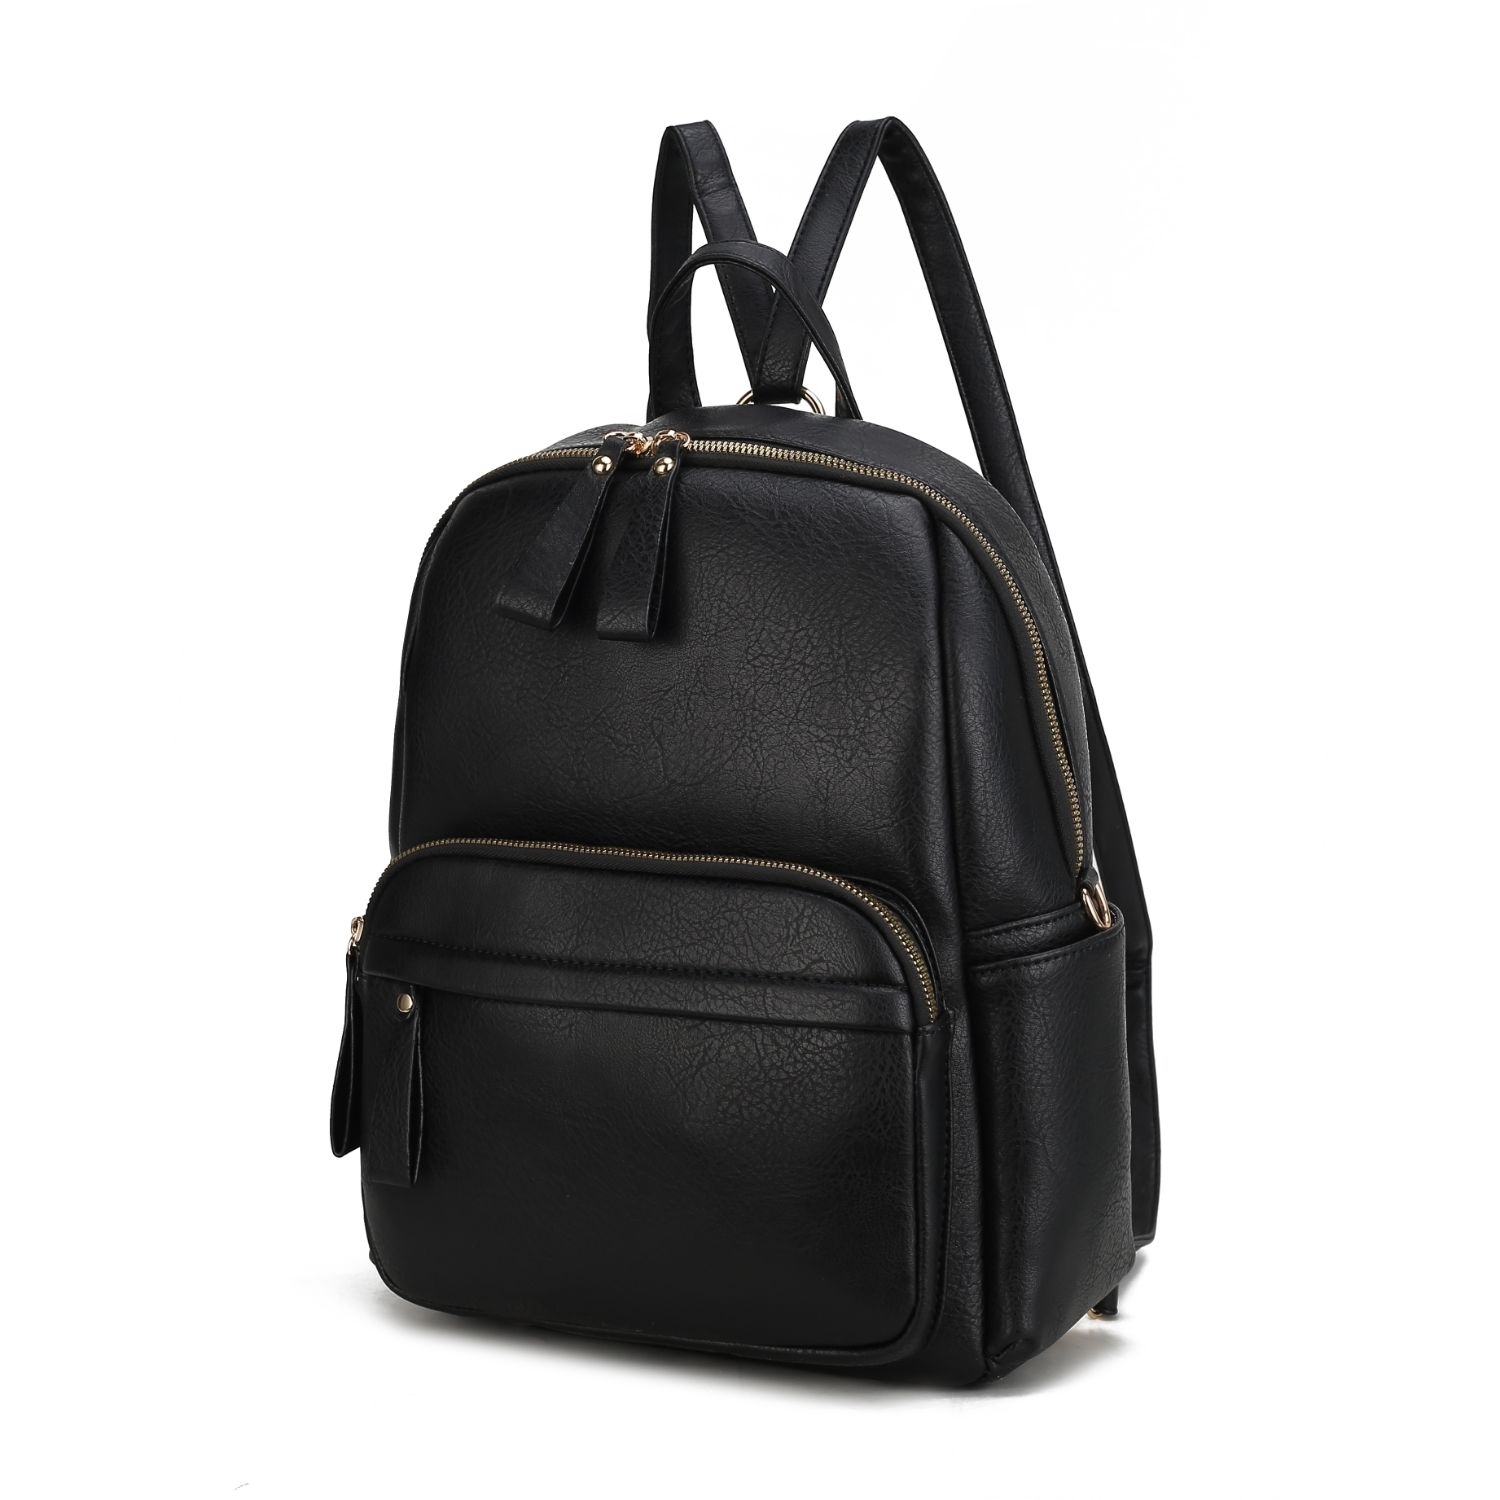 MKF Collection Yolane Backpack Convertible Crossbody Handbag by Mia k